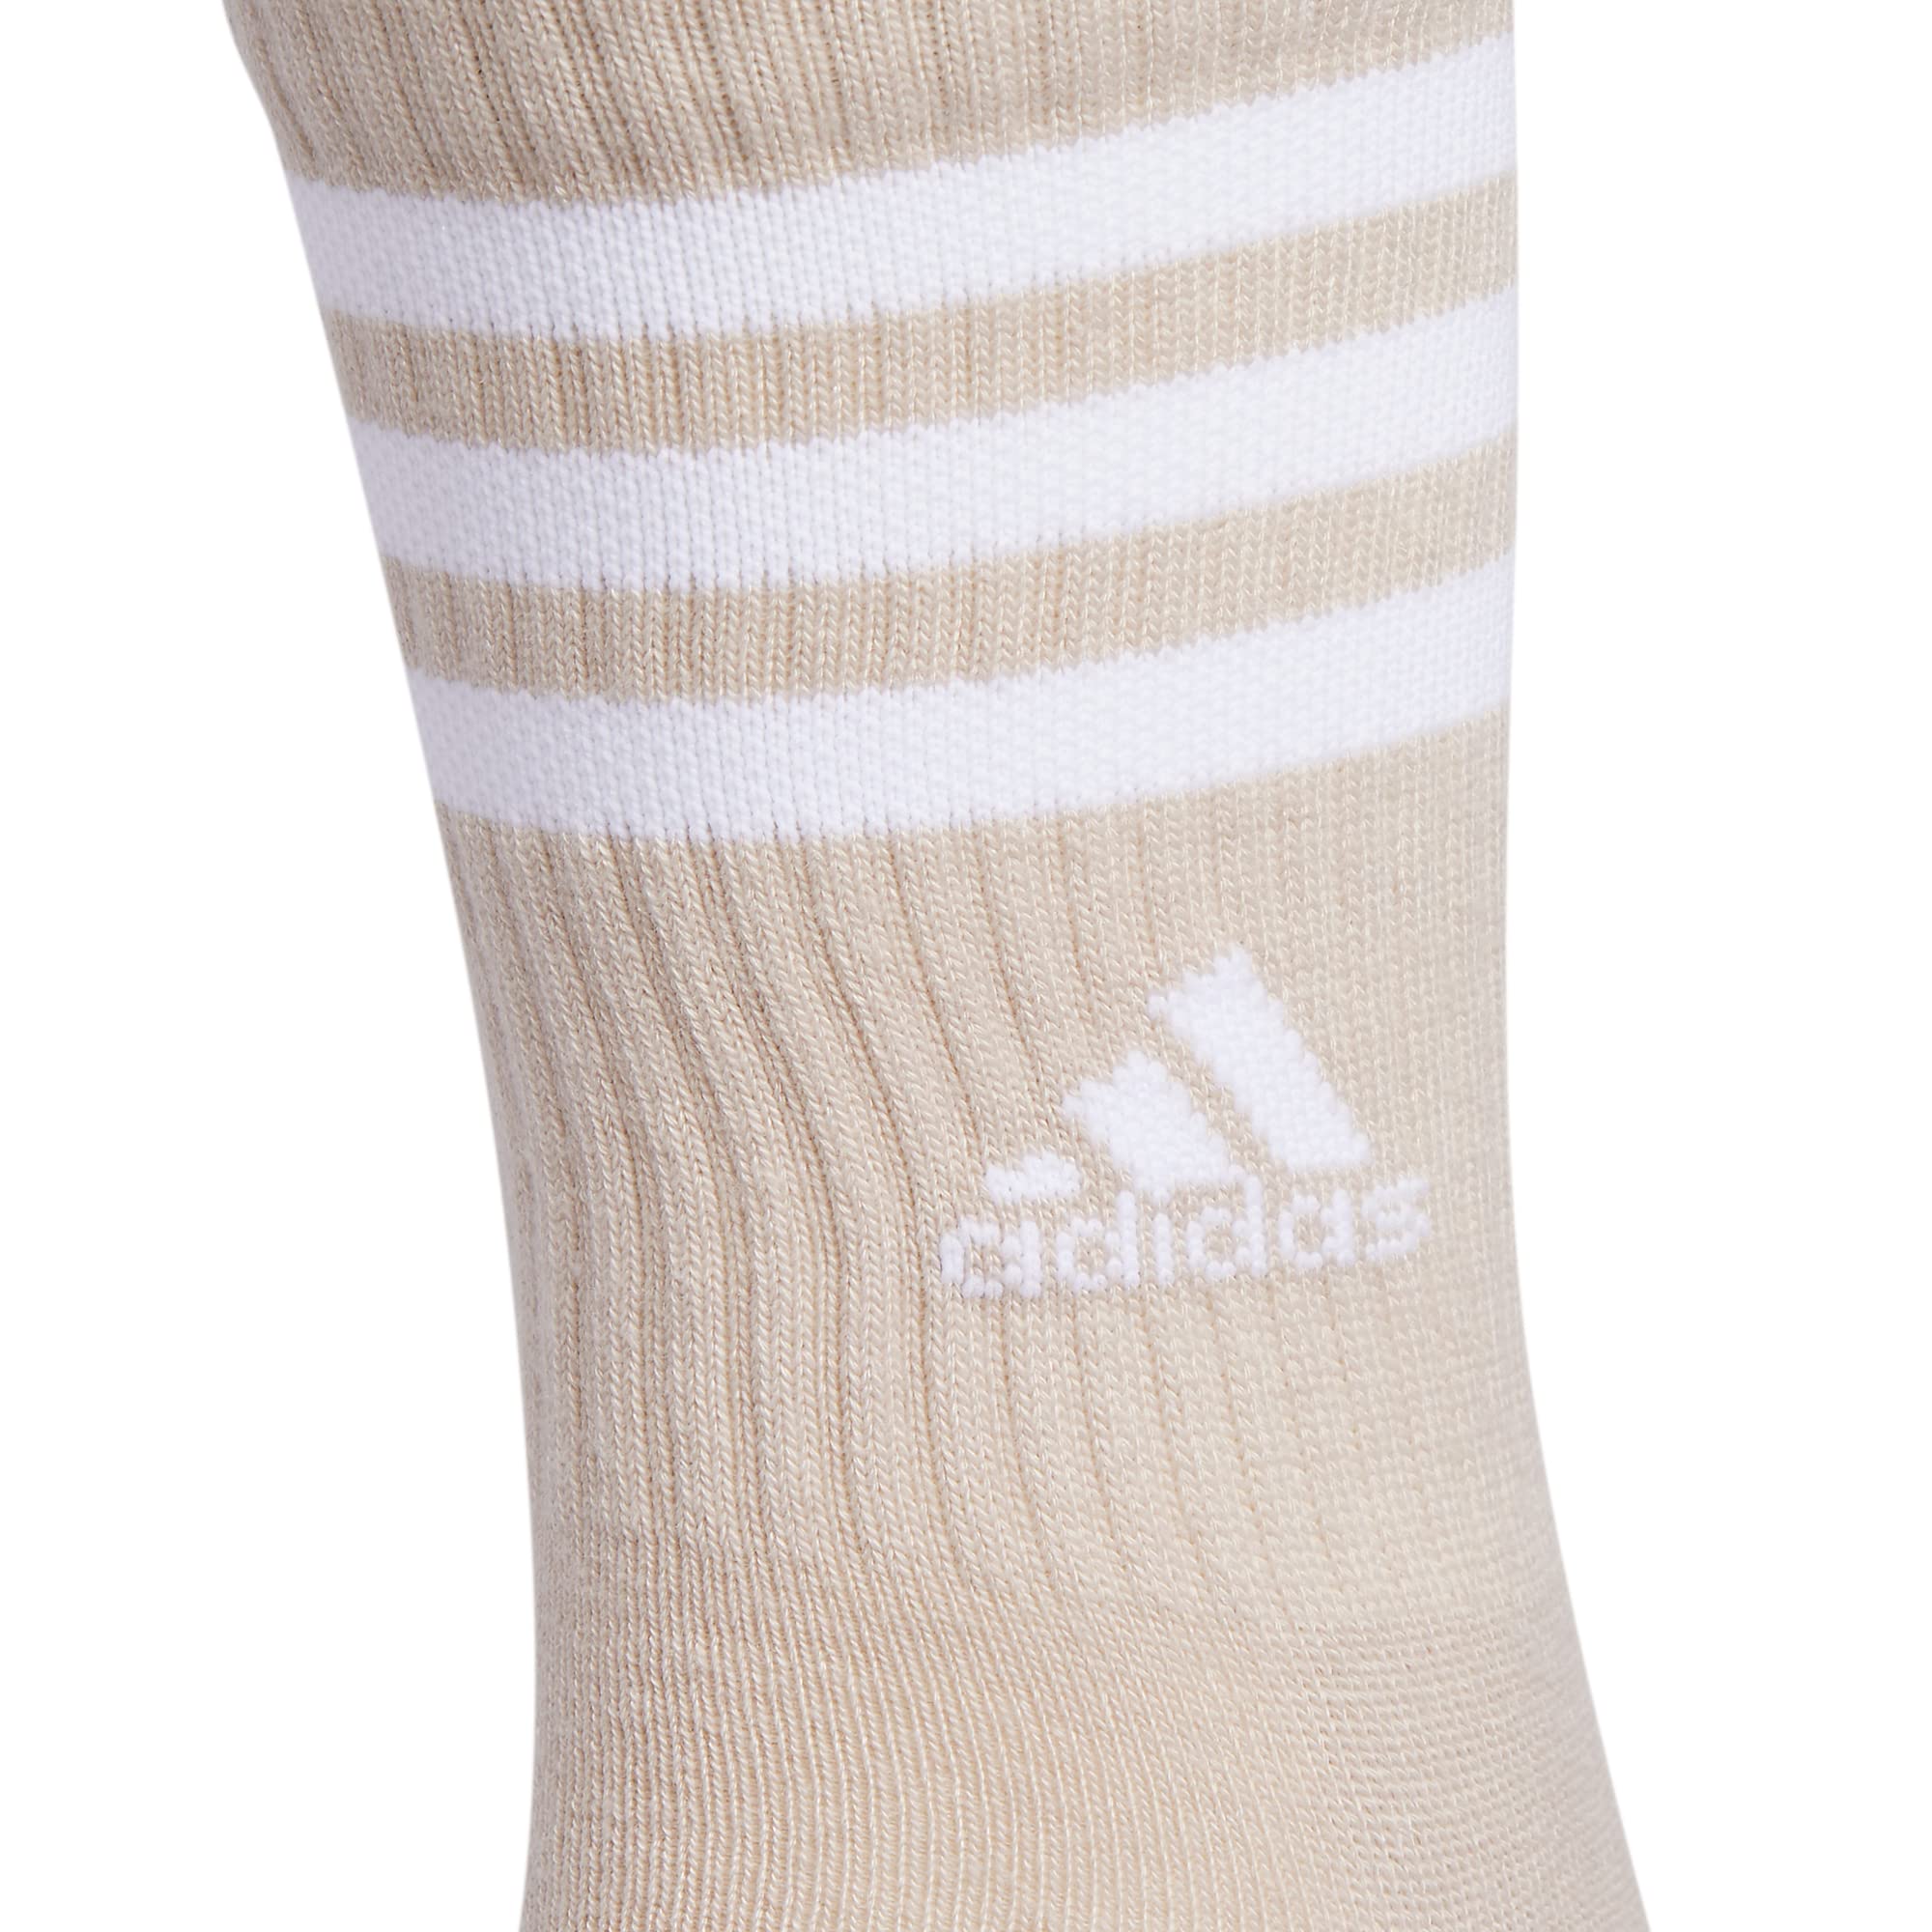 adidas Women's 3-Stripe Crew Socks (3-Pair) with Arch Compression